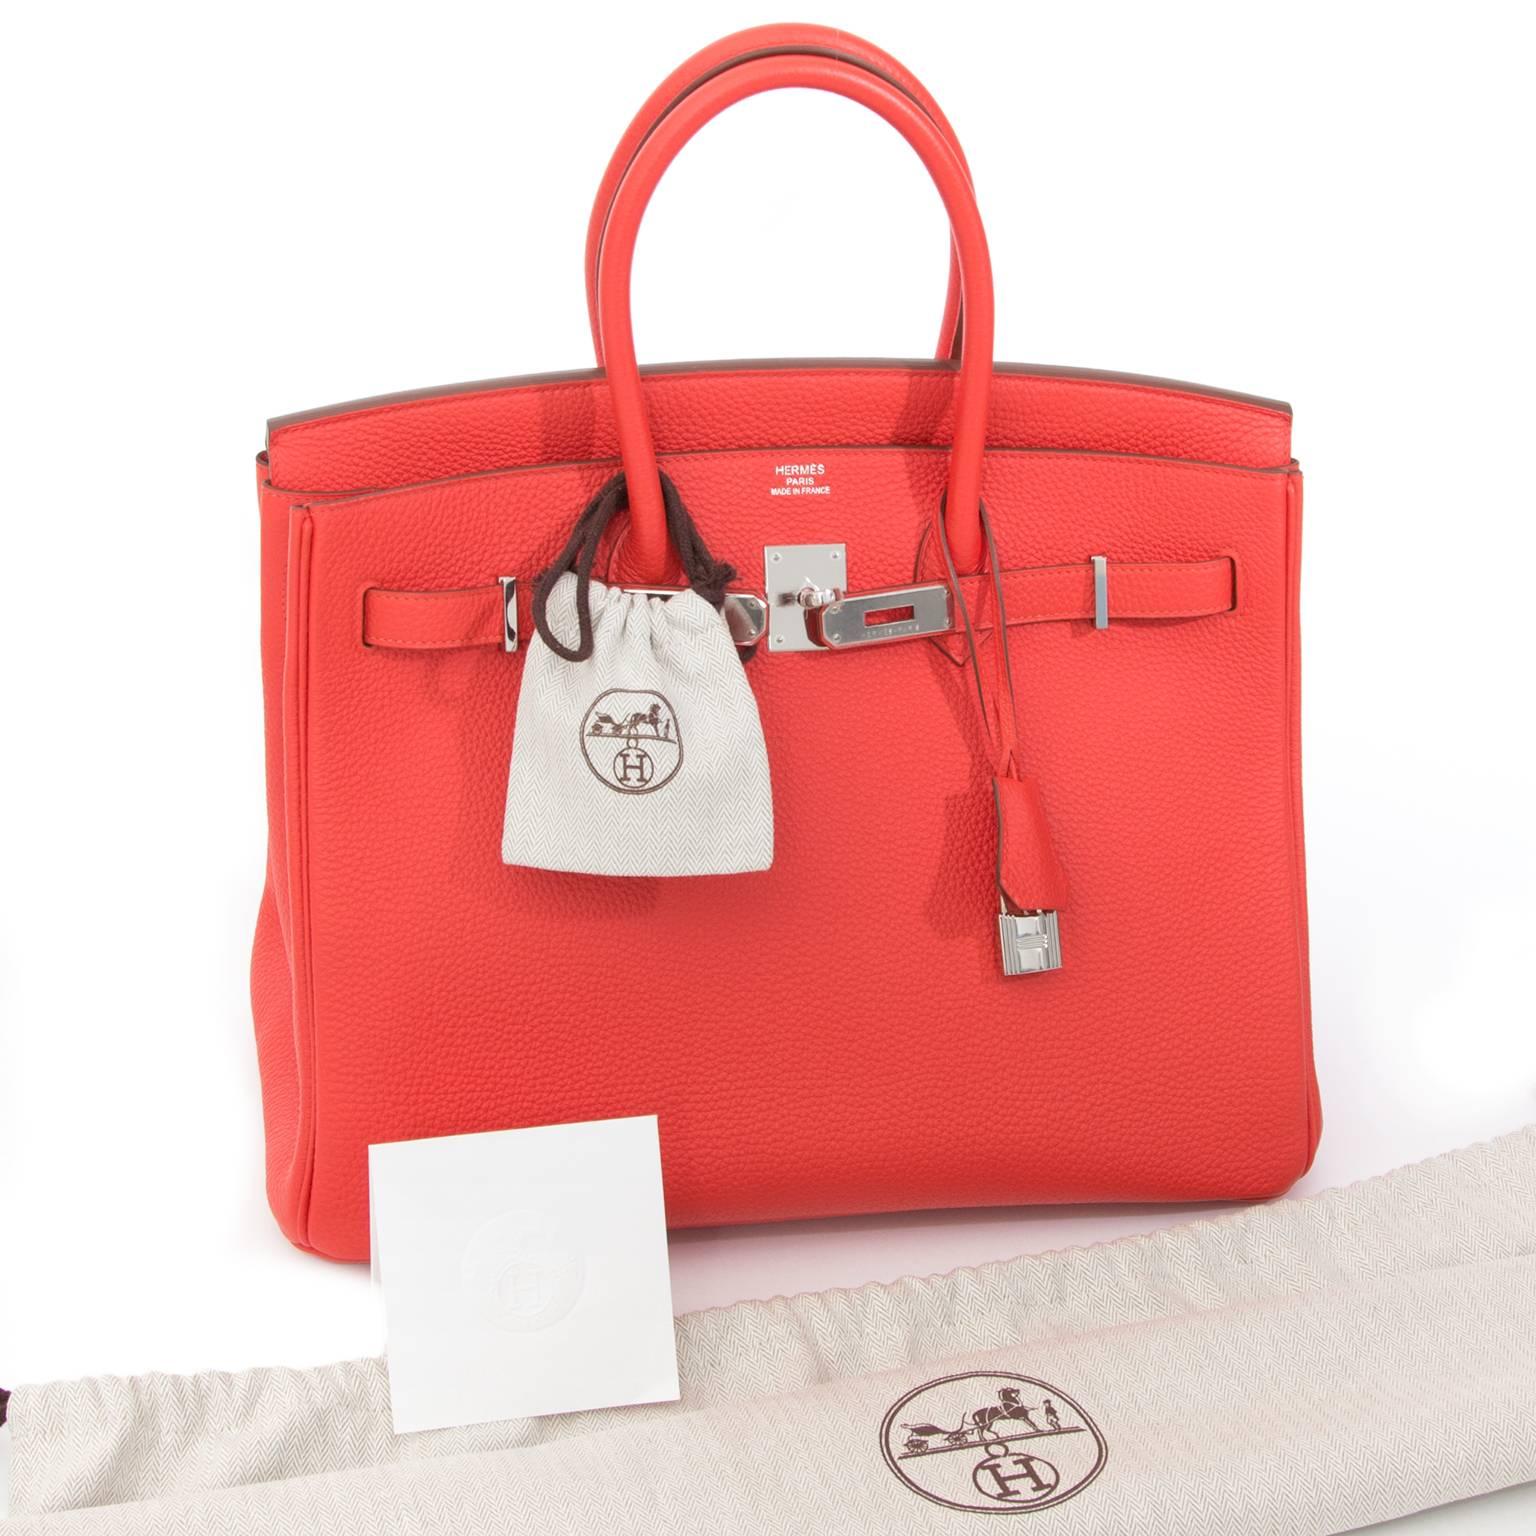 BRAND NEW Hermès Birkin Bag Togo Capucine PHW 35cm  4